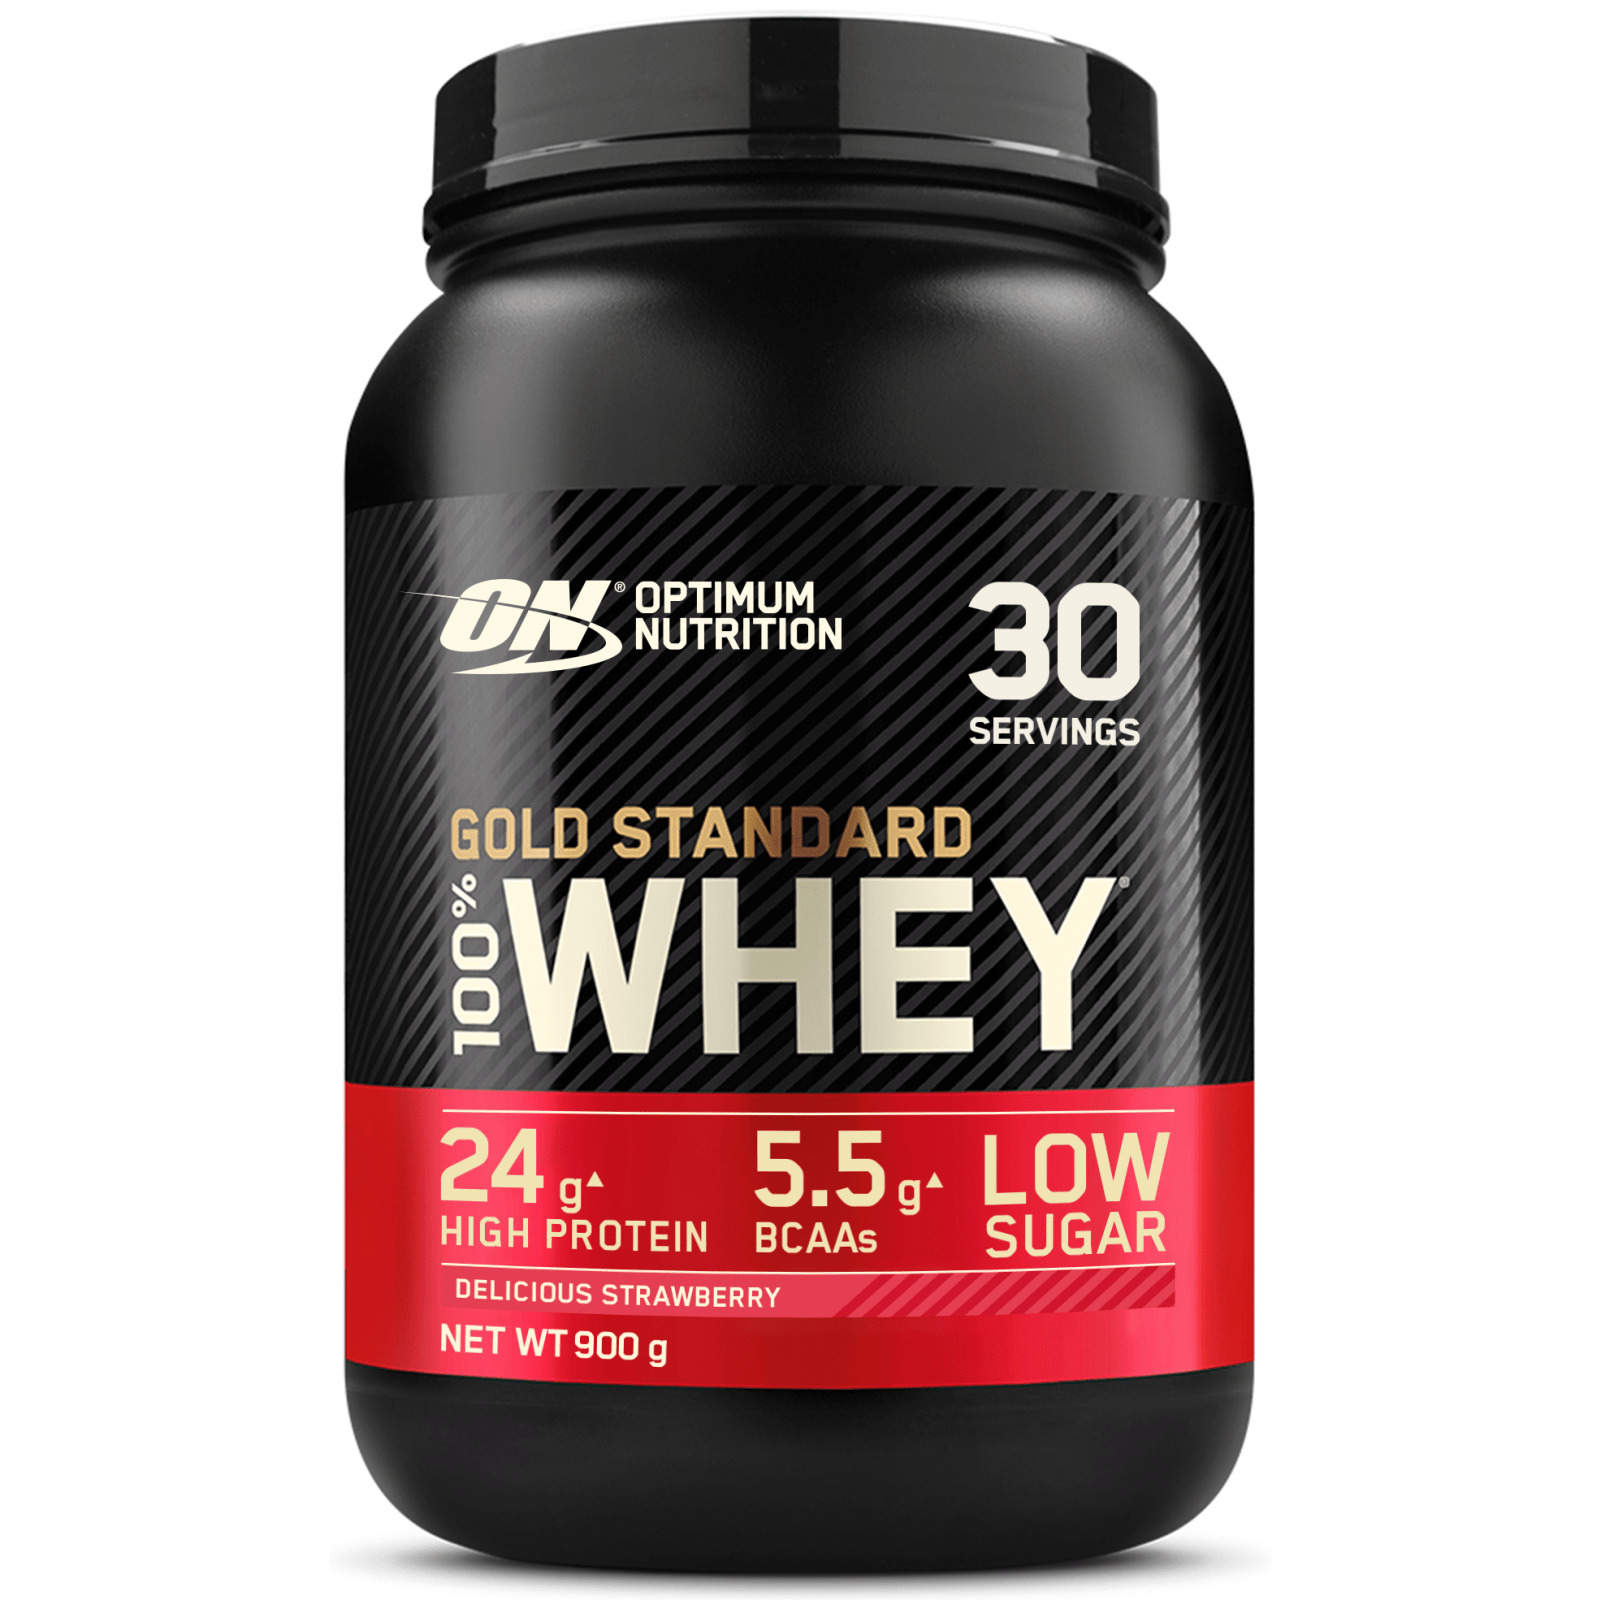 Optimum Nutrition 100% Whey Gold Standard (908g Dose)